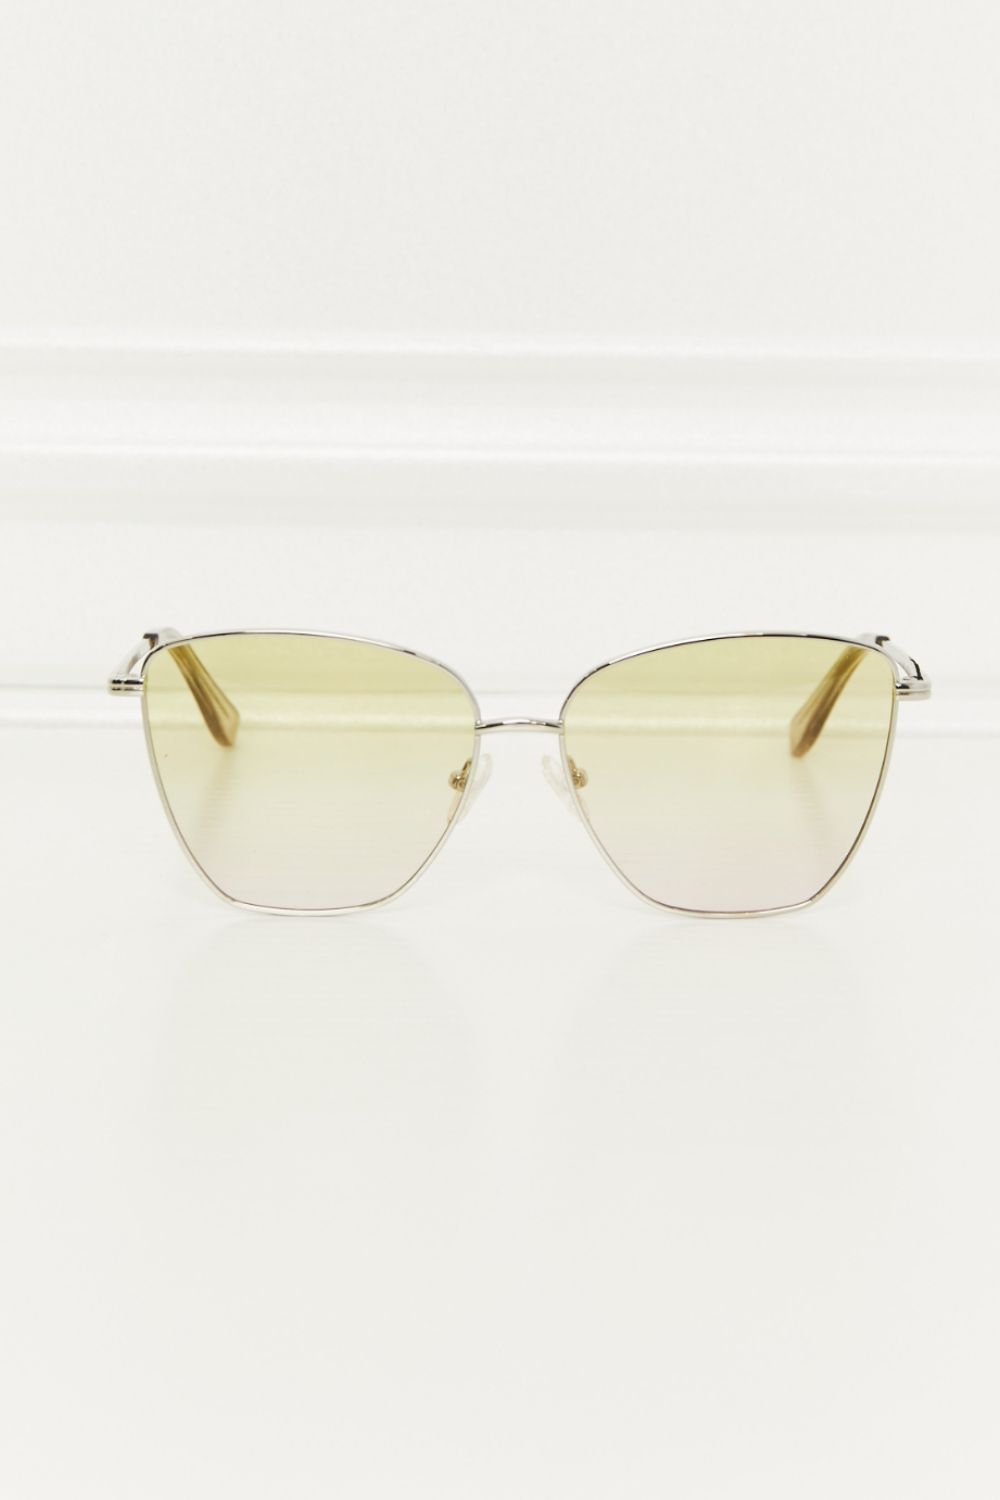 LEMON ONE SIZE - Metal Frame Full Rim Sunglasses - Sunglasses at TFC&H Co.